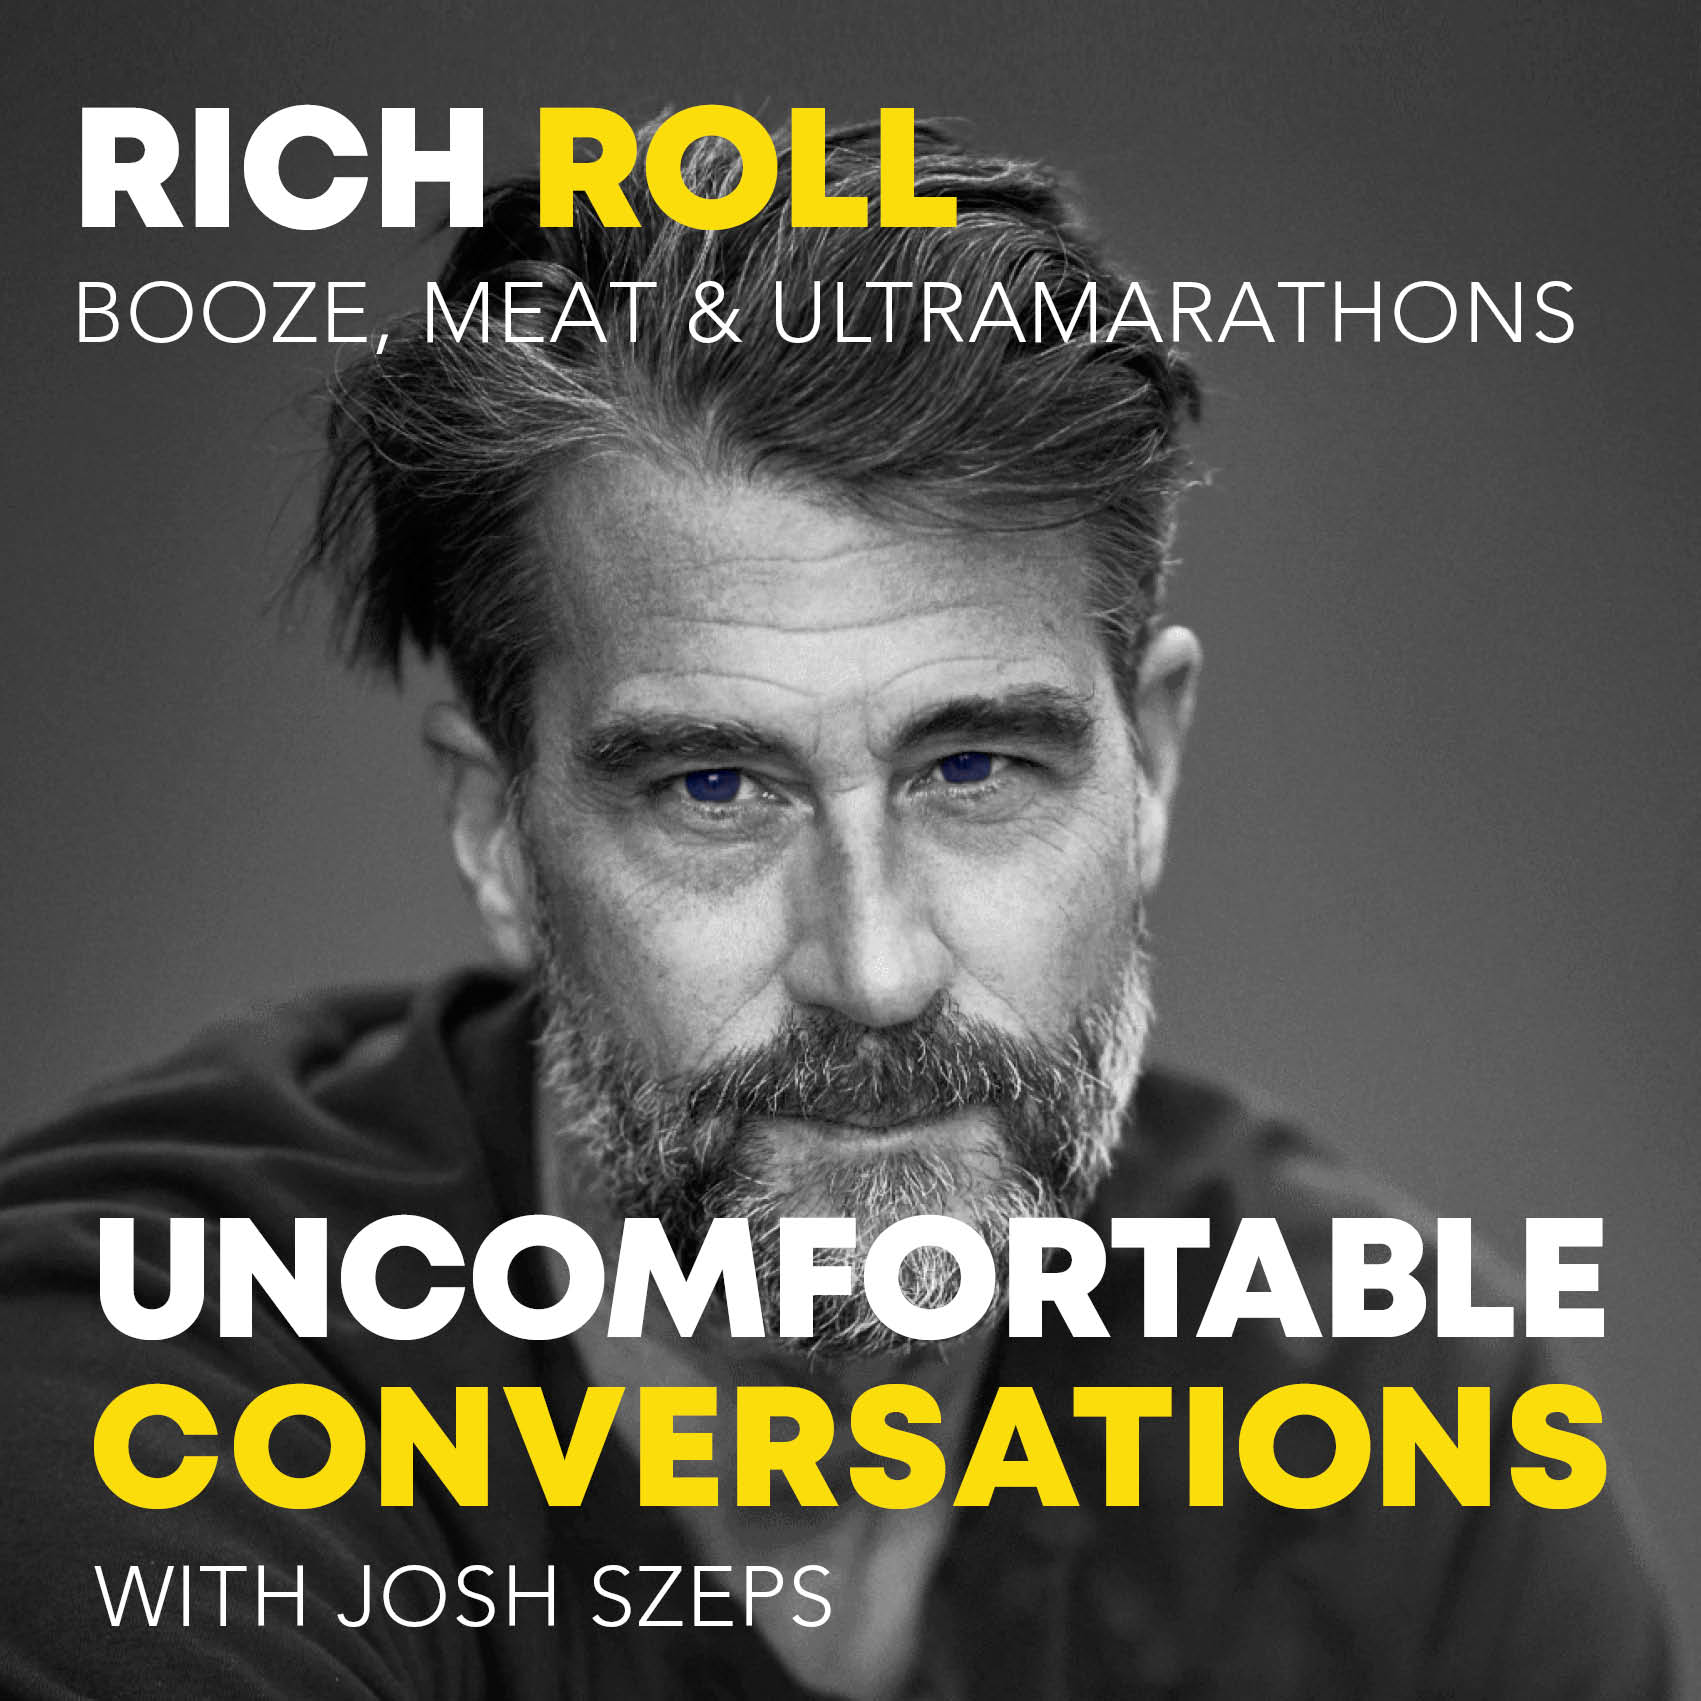 "Booze, Meat & Ultramarathons" with Rich Roll